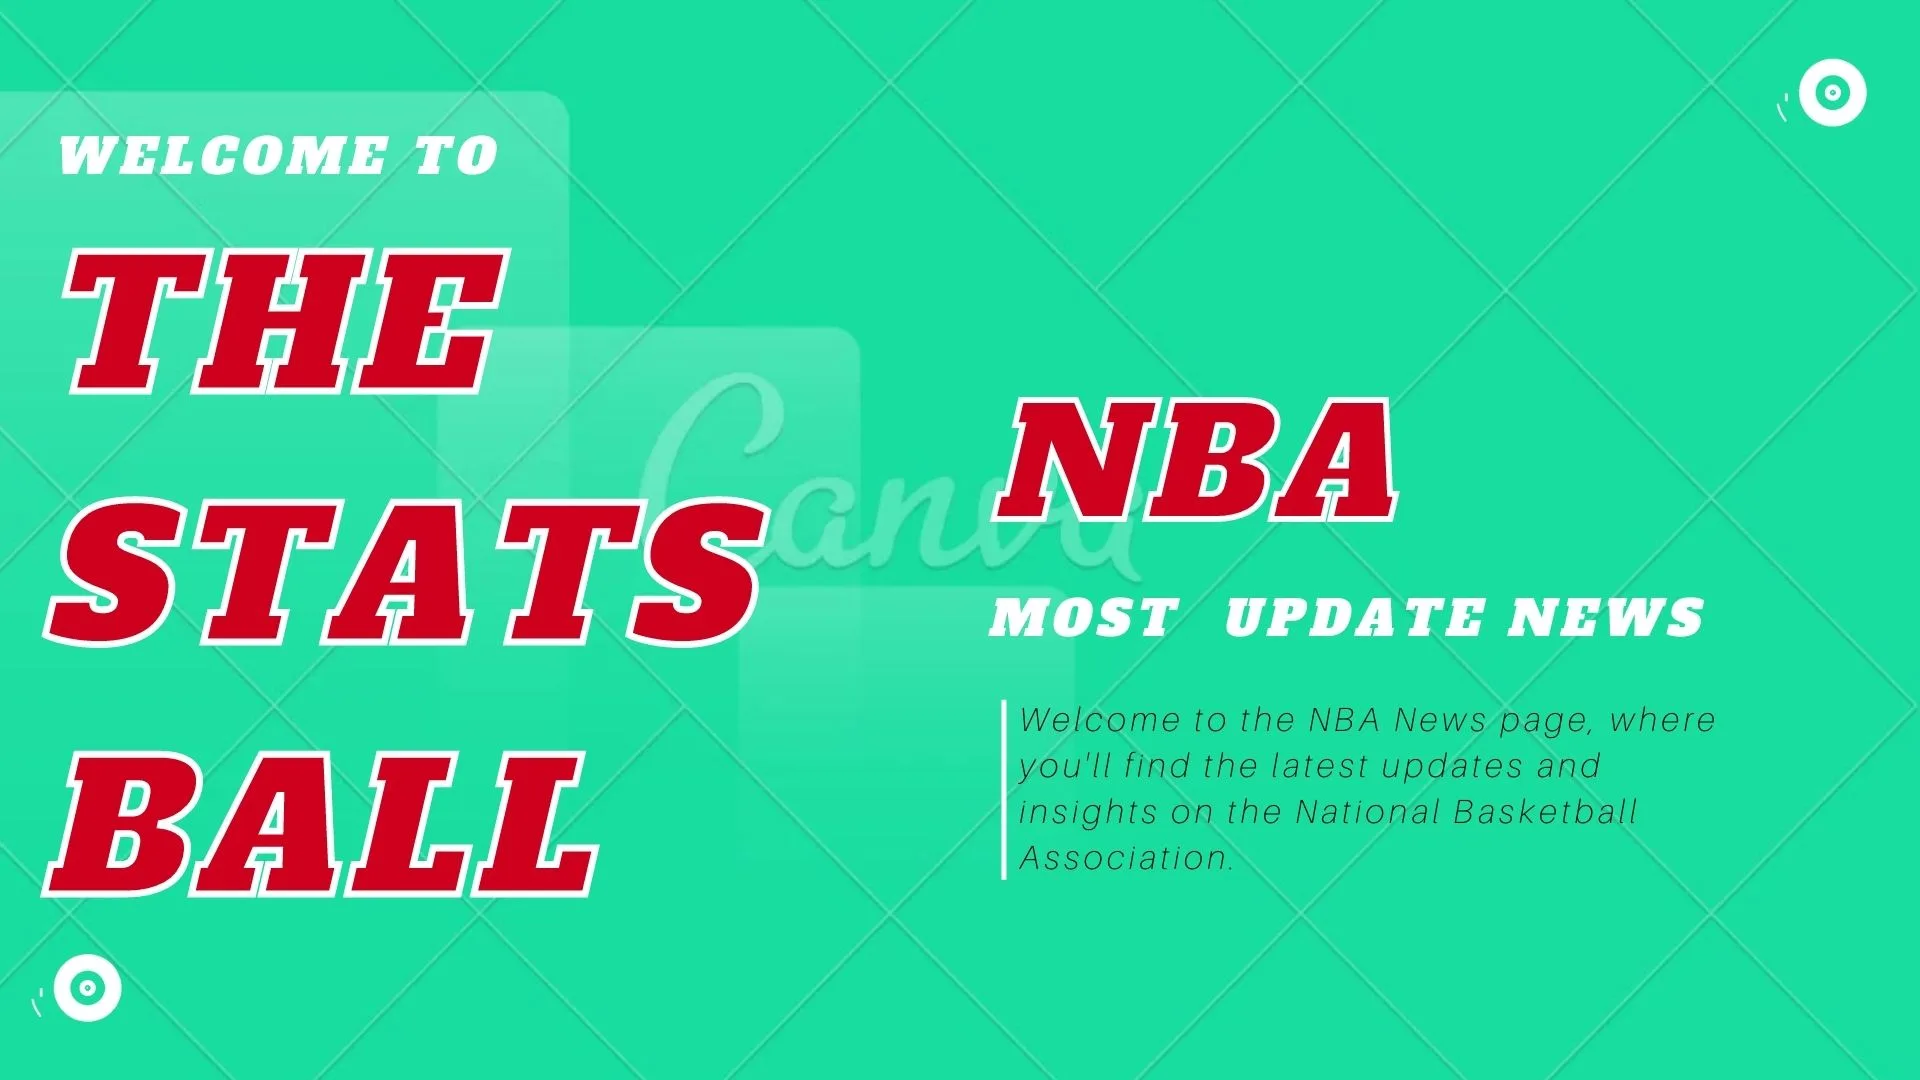 TheStatsBall NBA News